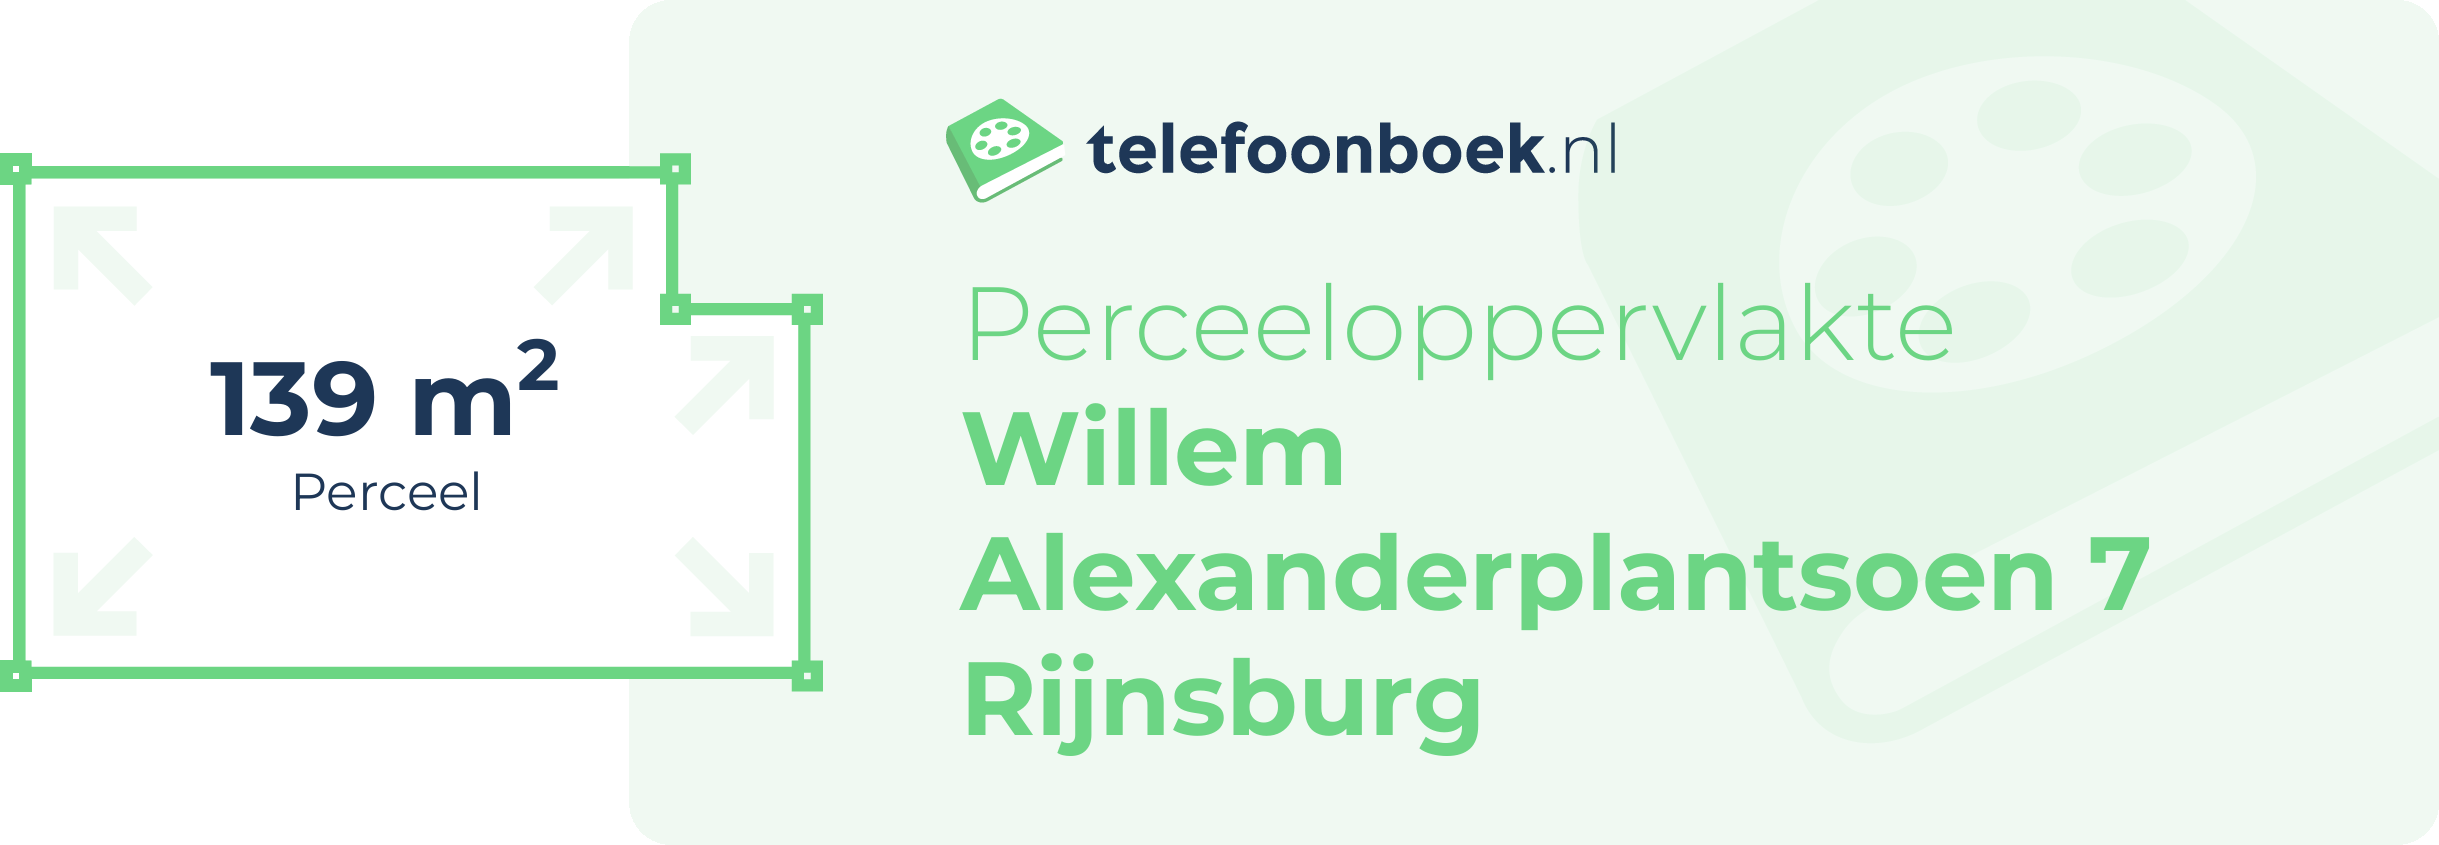 Perceeloppervlakte Willem Alexanderplantsoen 7 Rijnsburg